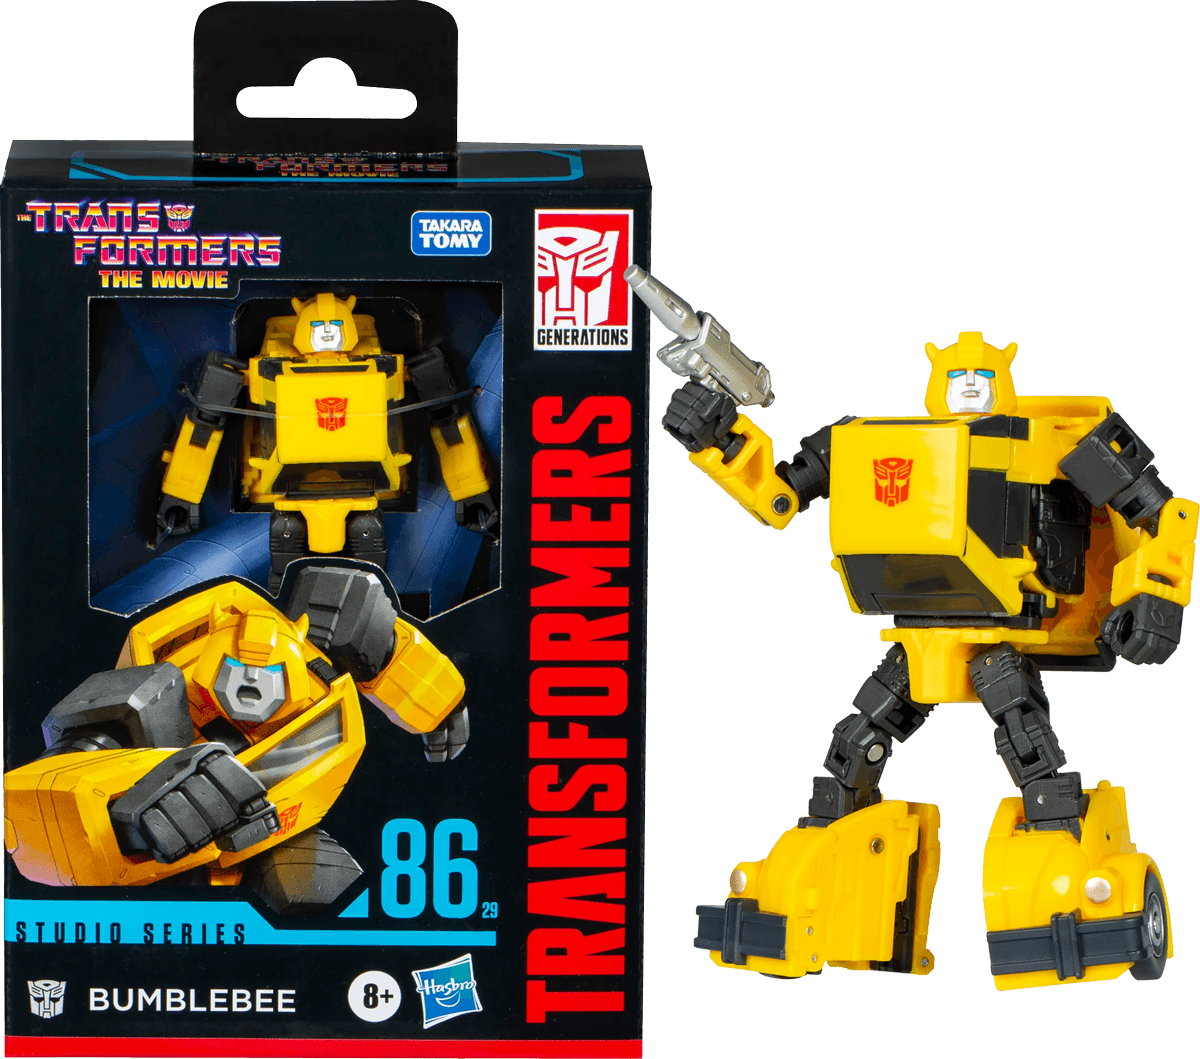 26502 Transformers Studio Series Deluxe The Transformers: The Movie 86-29 Bumblebee - Hasbro - Titan Pop Culture